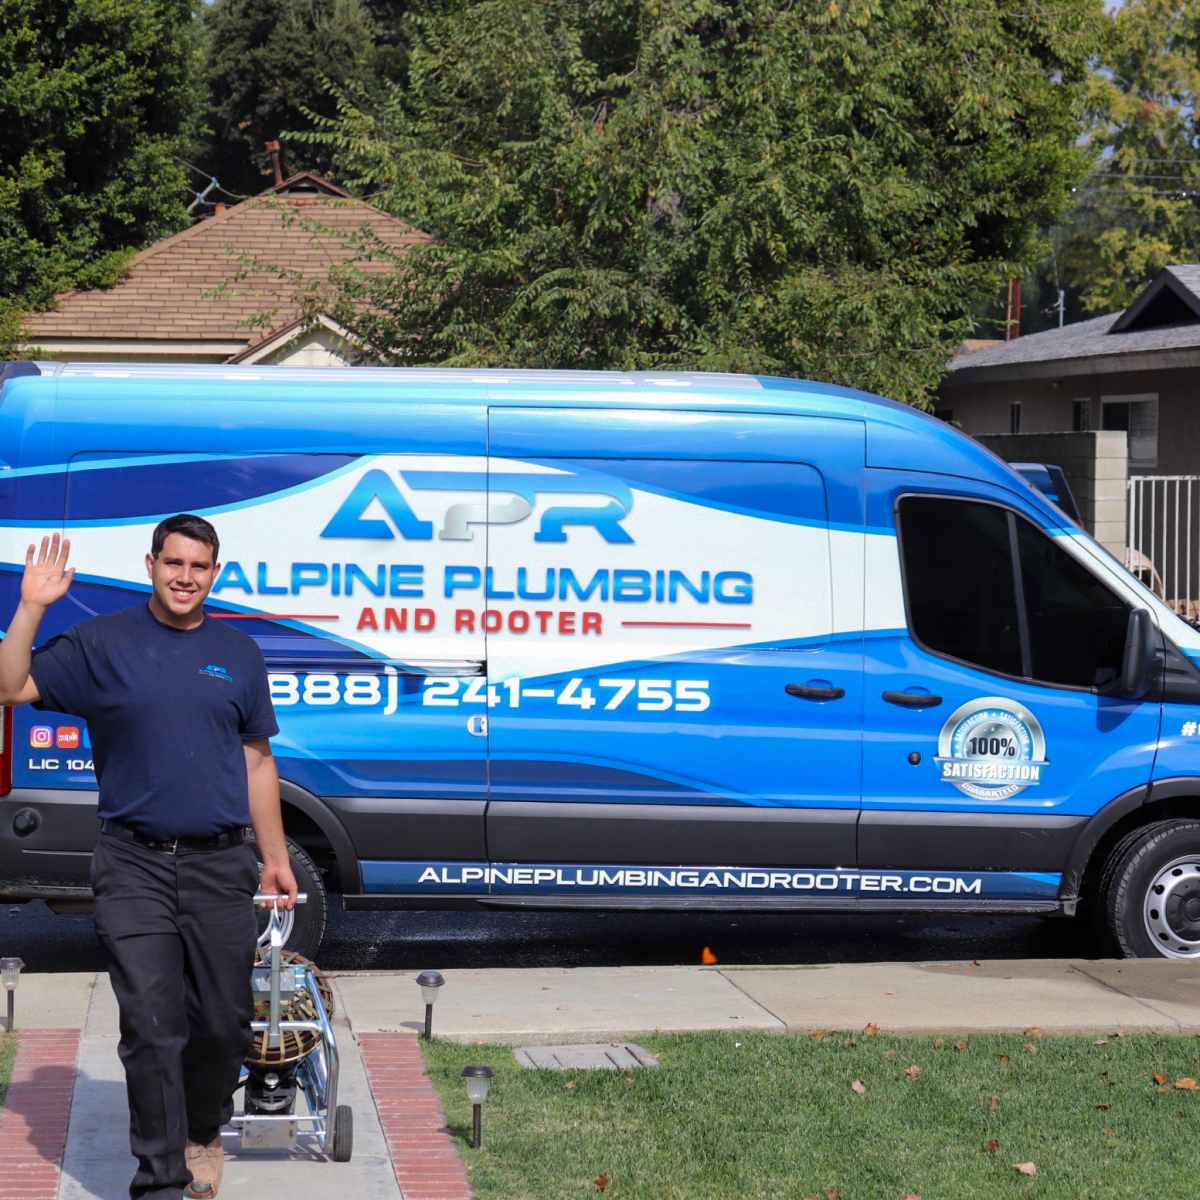 Alpine Plumbing & Rooter: Trusted Plumbers in San Dimas for All Plumbing Needs